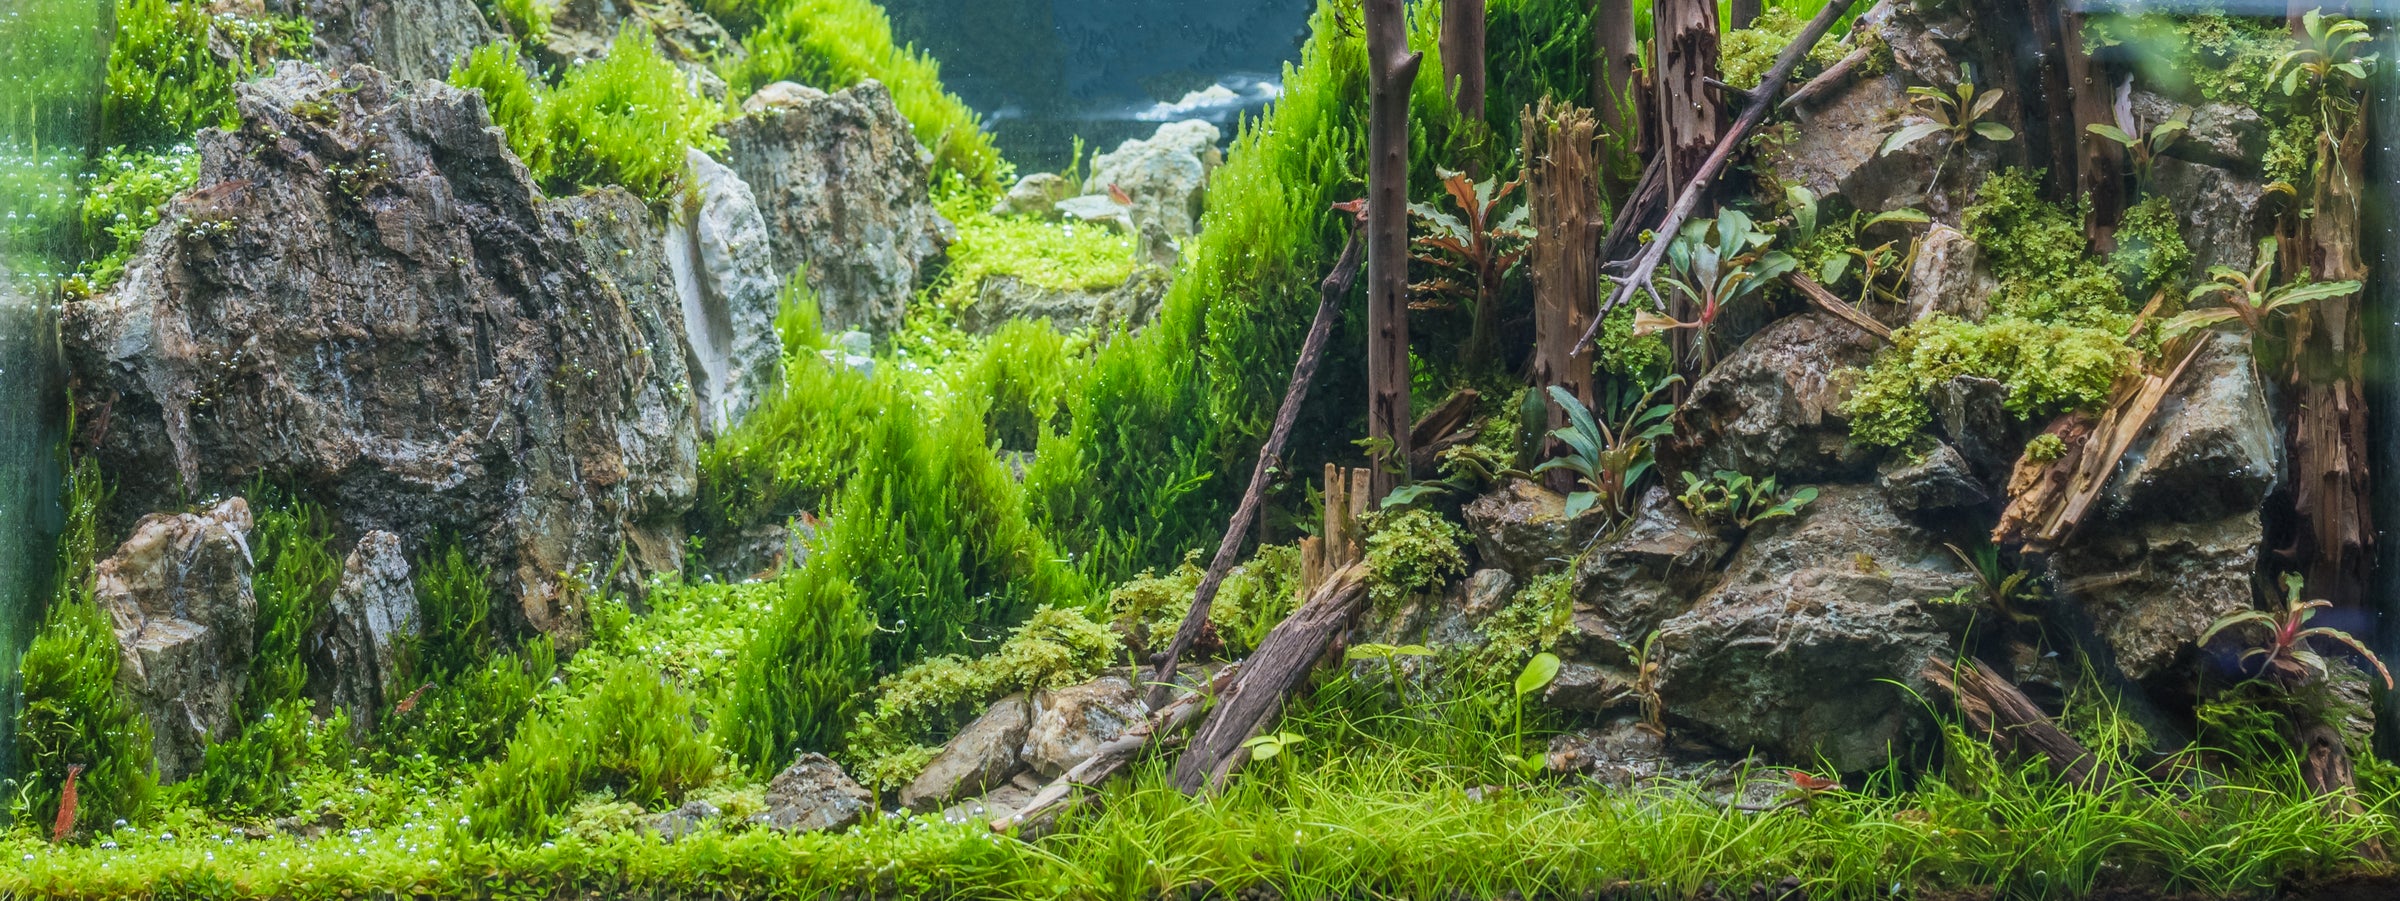 aquascape with rocks wood and moss